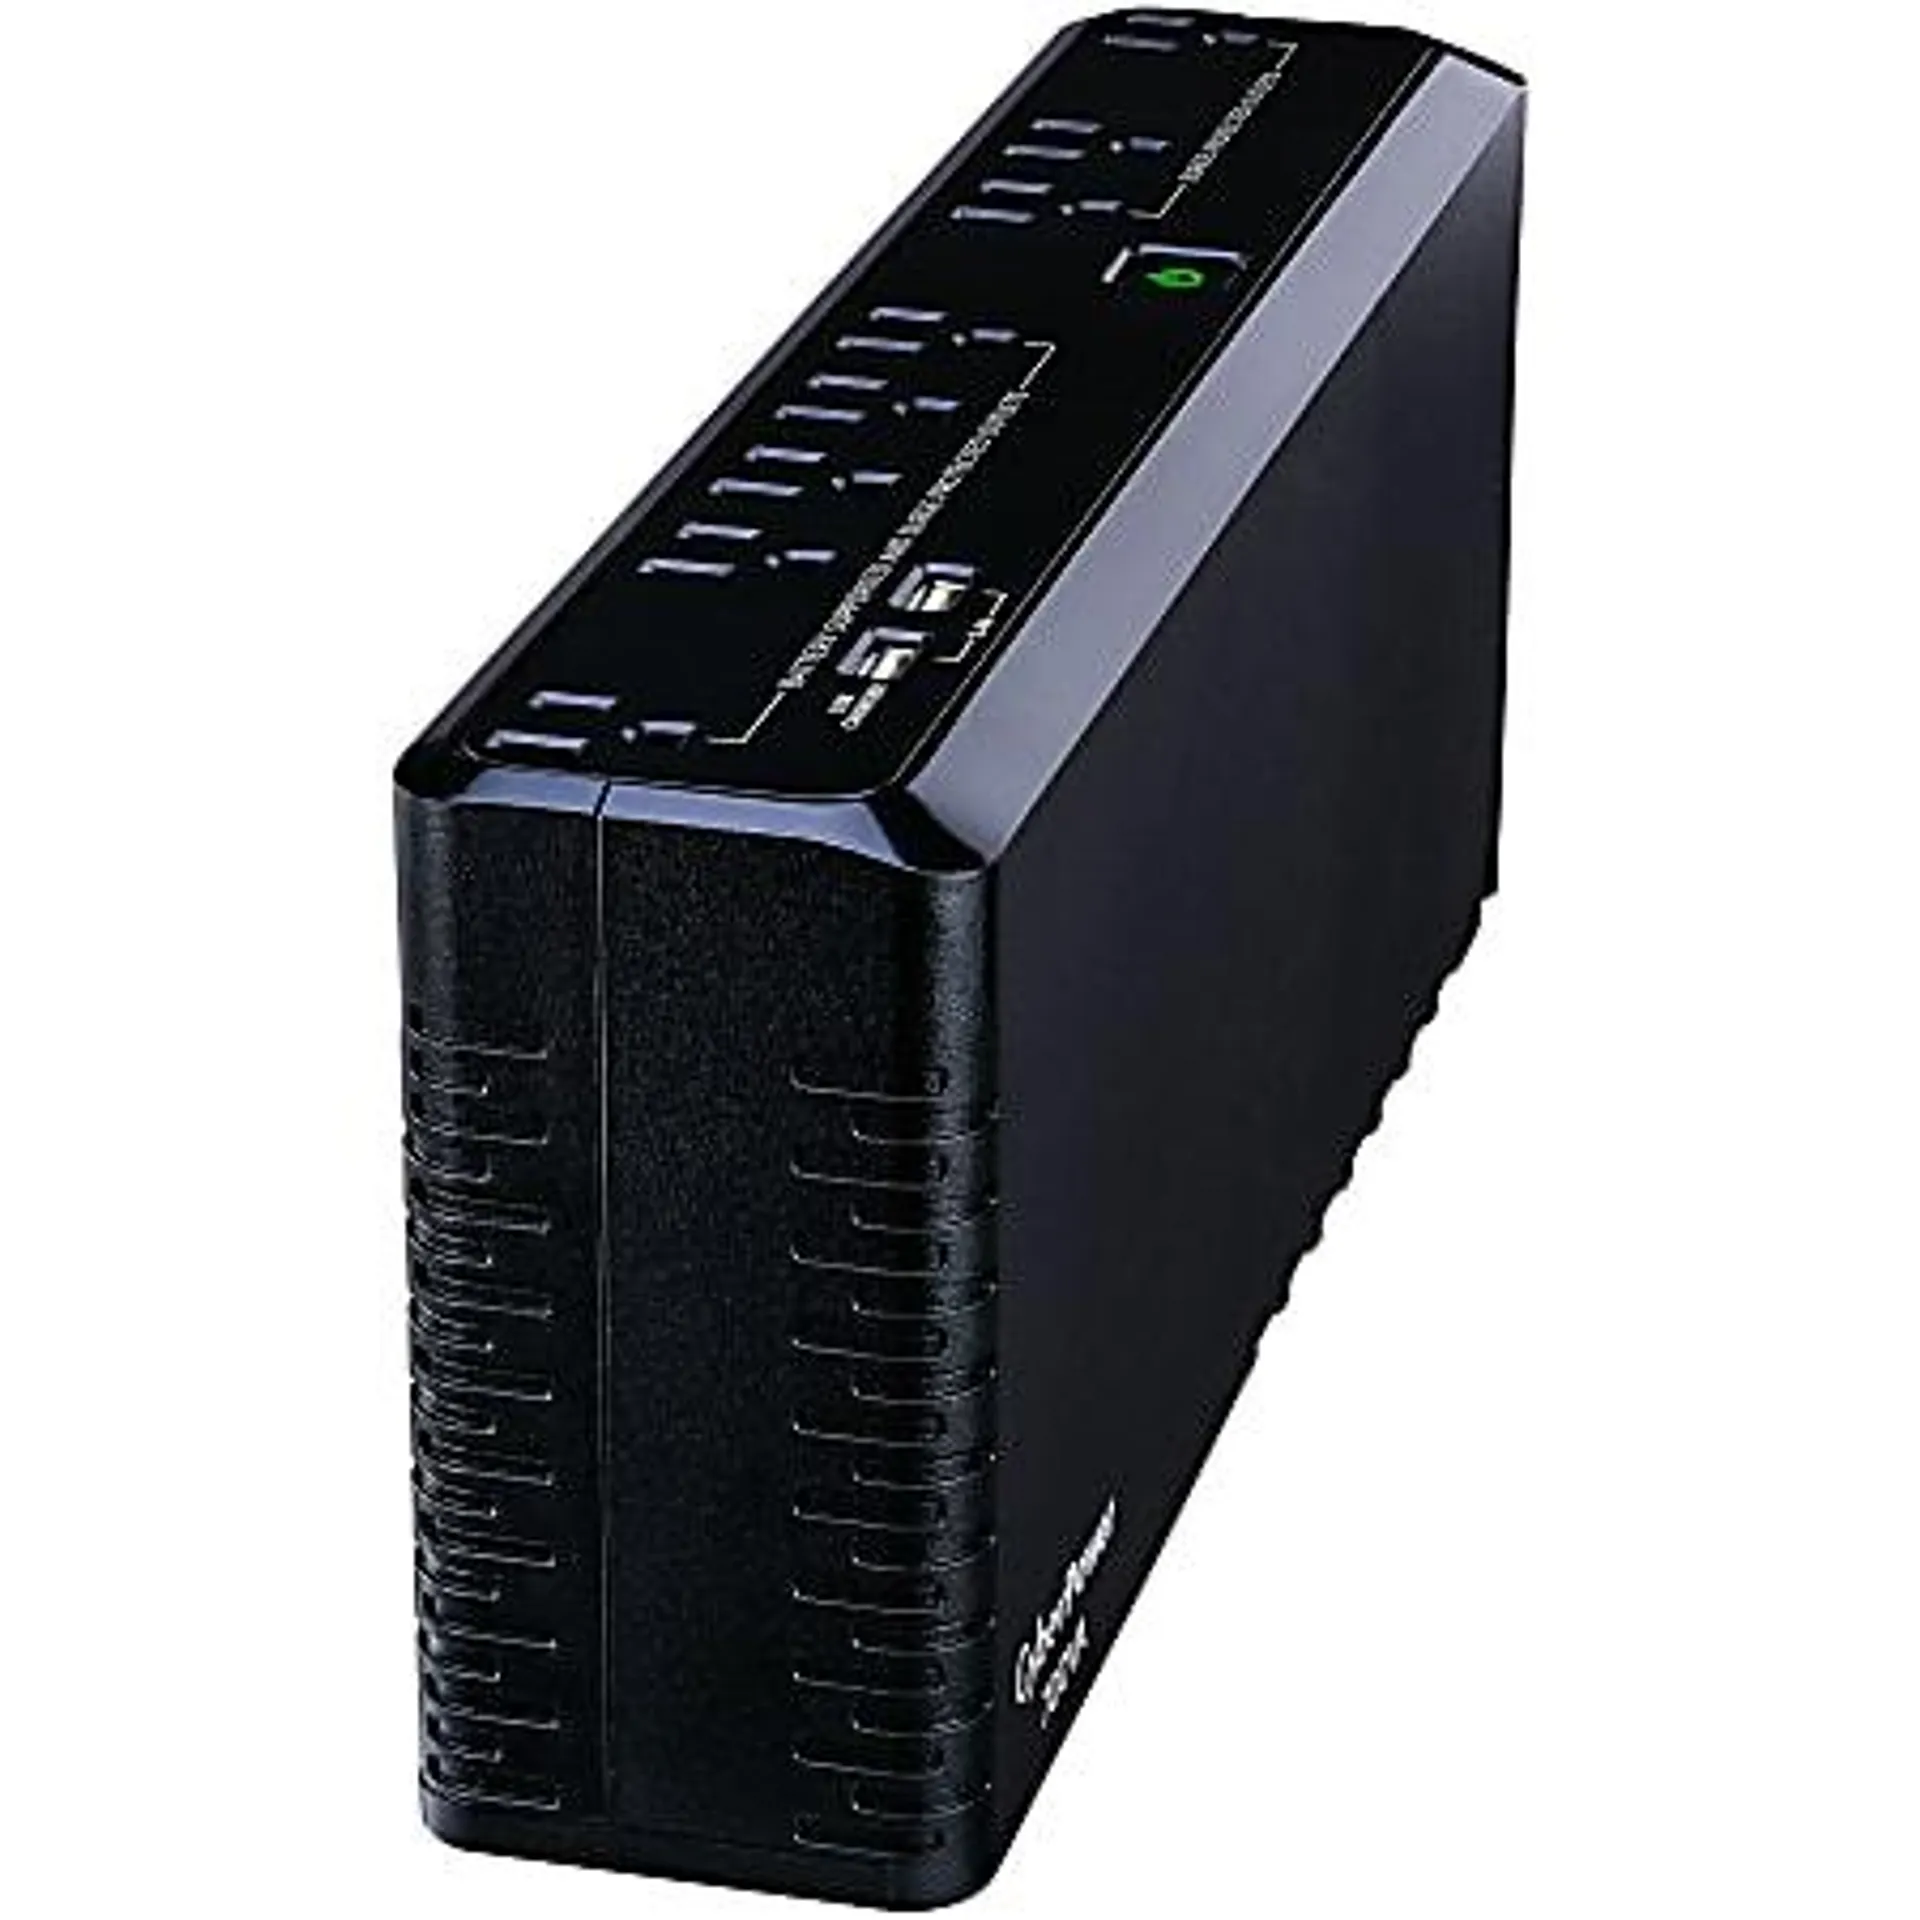 CyberPower SL700U Standby UPS Systems - 700VA/370W, 120 VAC, NEMA 5-15P, Compact, 8 Outlets, PowerPanel® Personal, $100000 CEG, 3YR Warranty